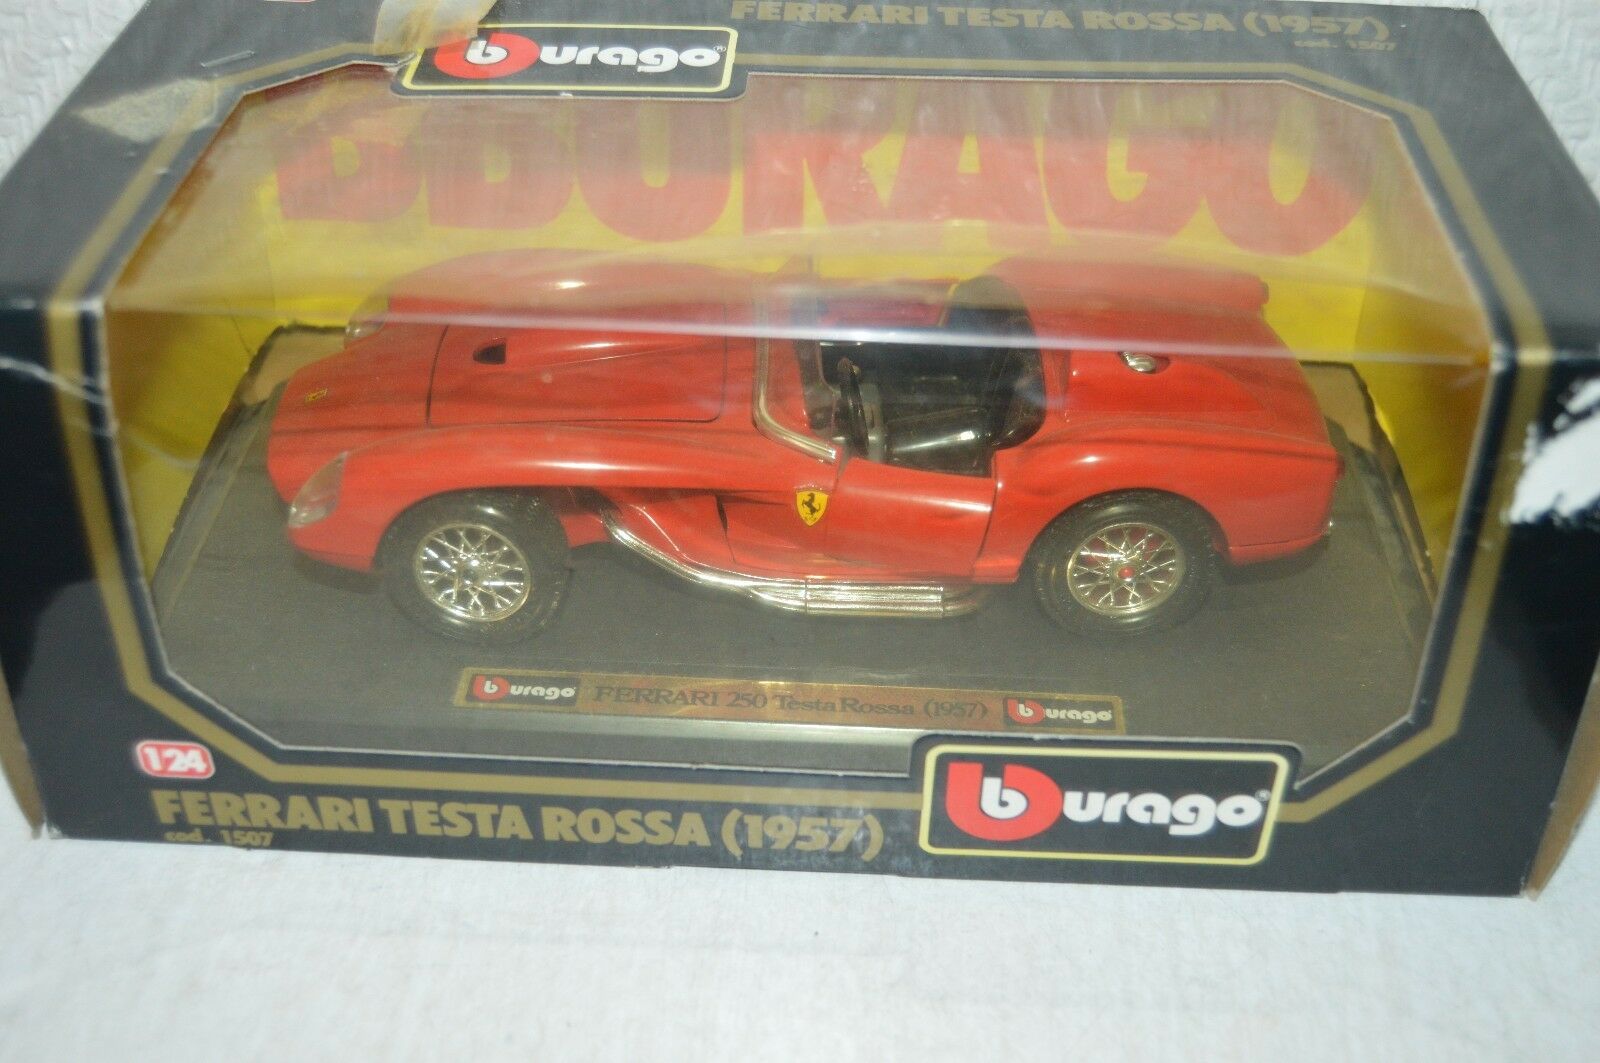 Car Burago Ferrari Testa Rossa 1957 Die-cast New Box 1/24 1507